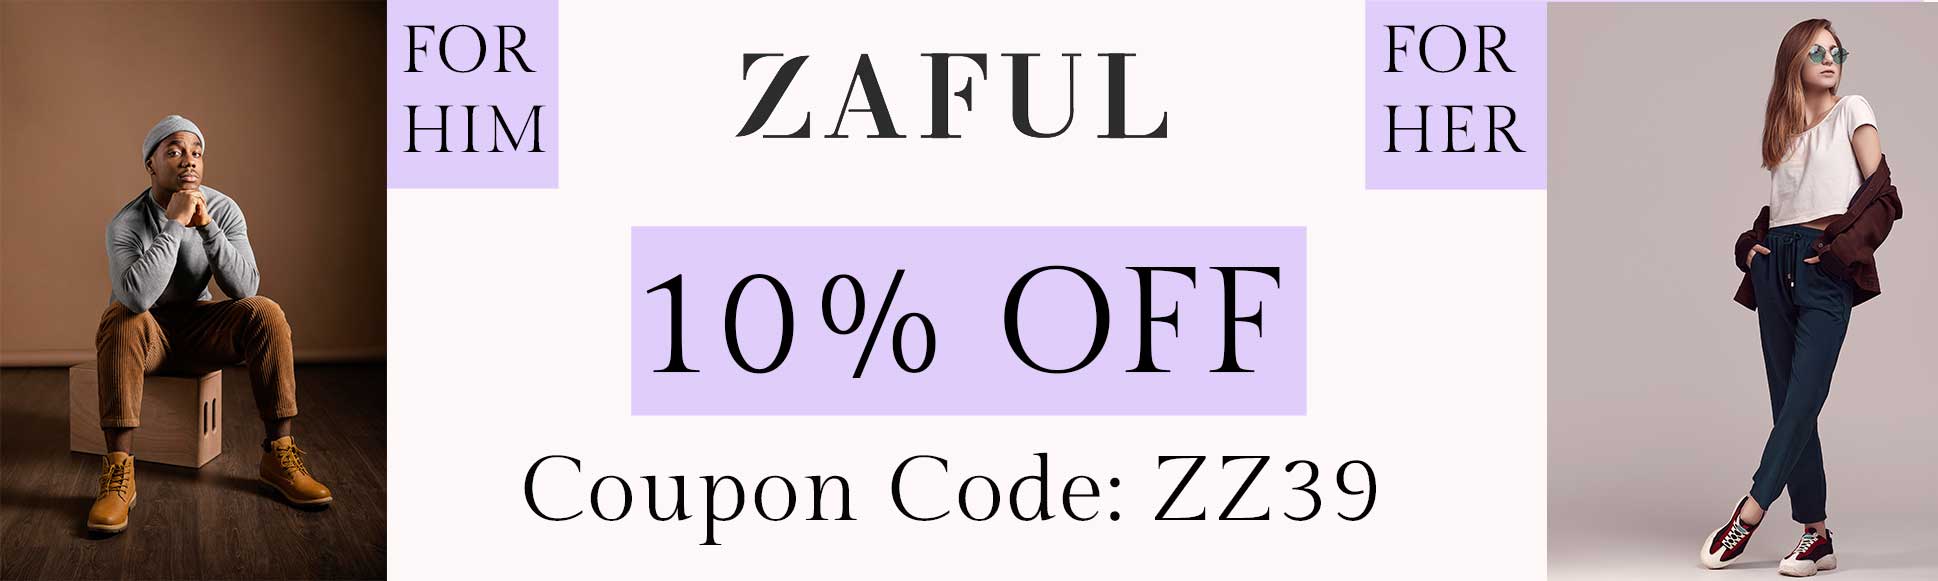 zaful kuwait coupon code